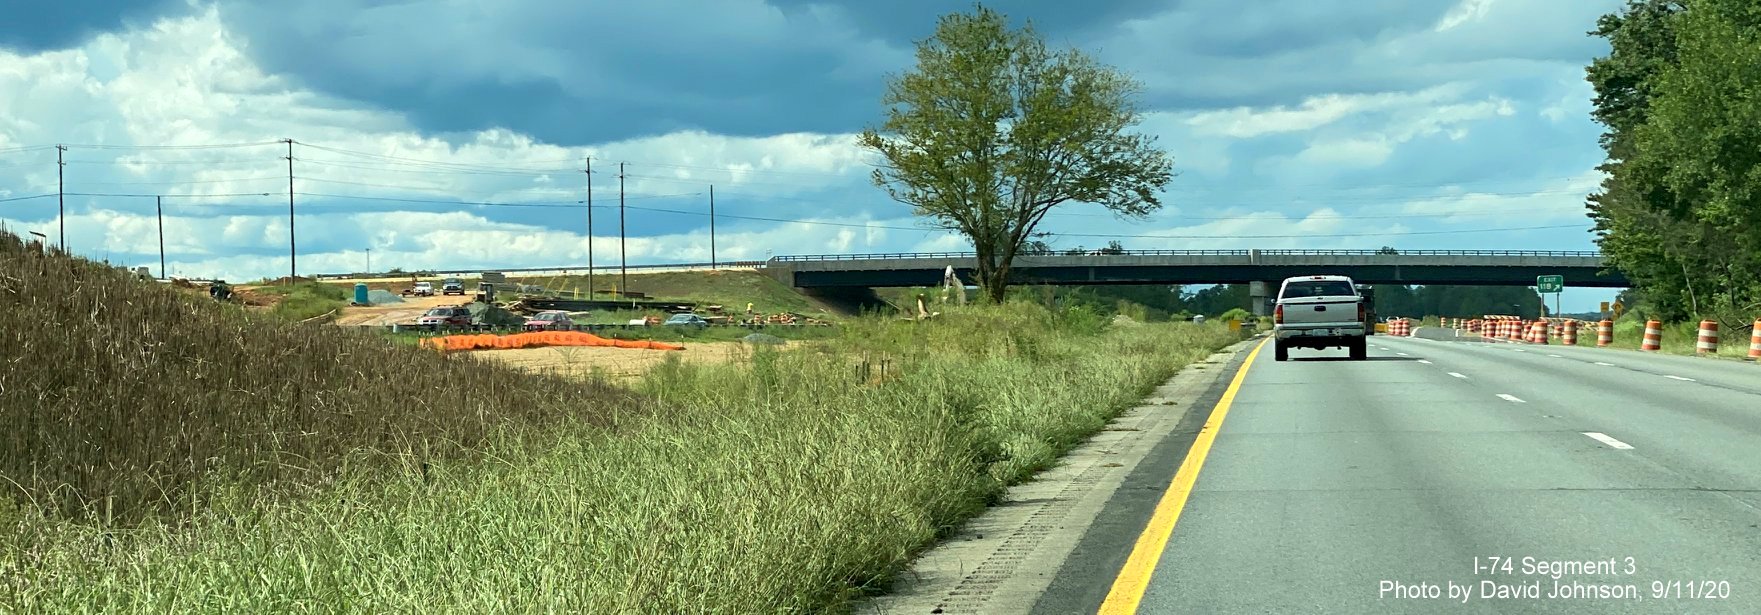 Image of new NC 65 bridge over US 52 North built as part of Winston Salem Northern Beltway interchange project, by David Johnson September 2020